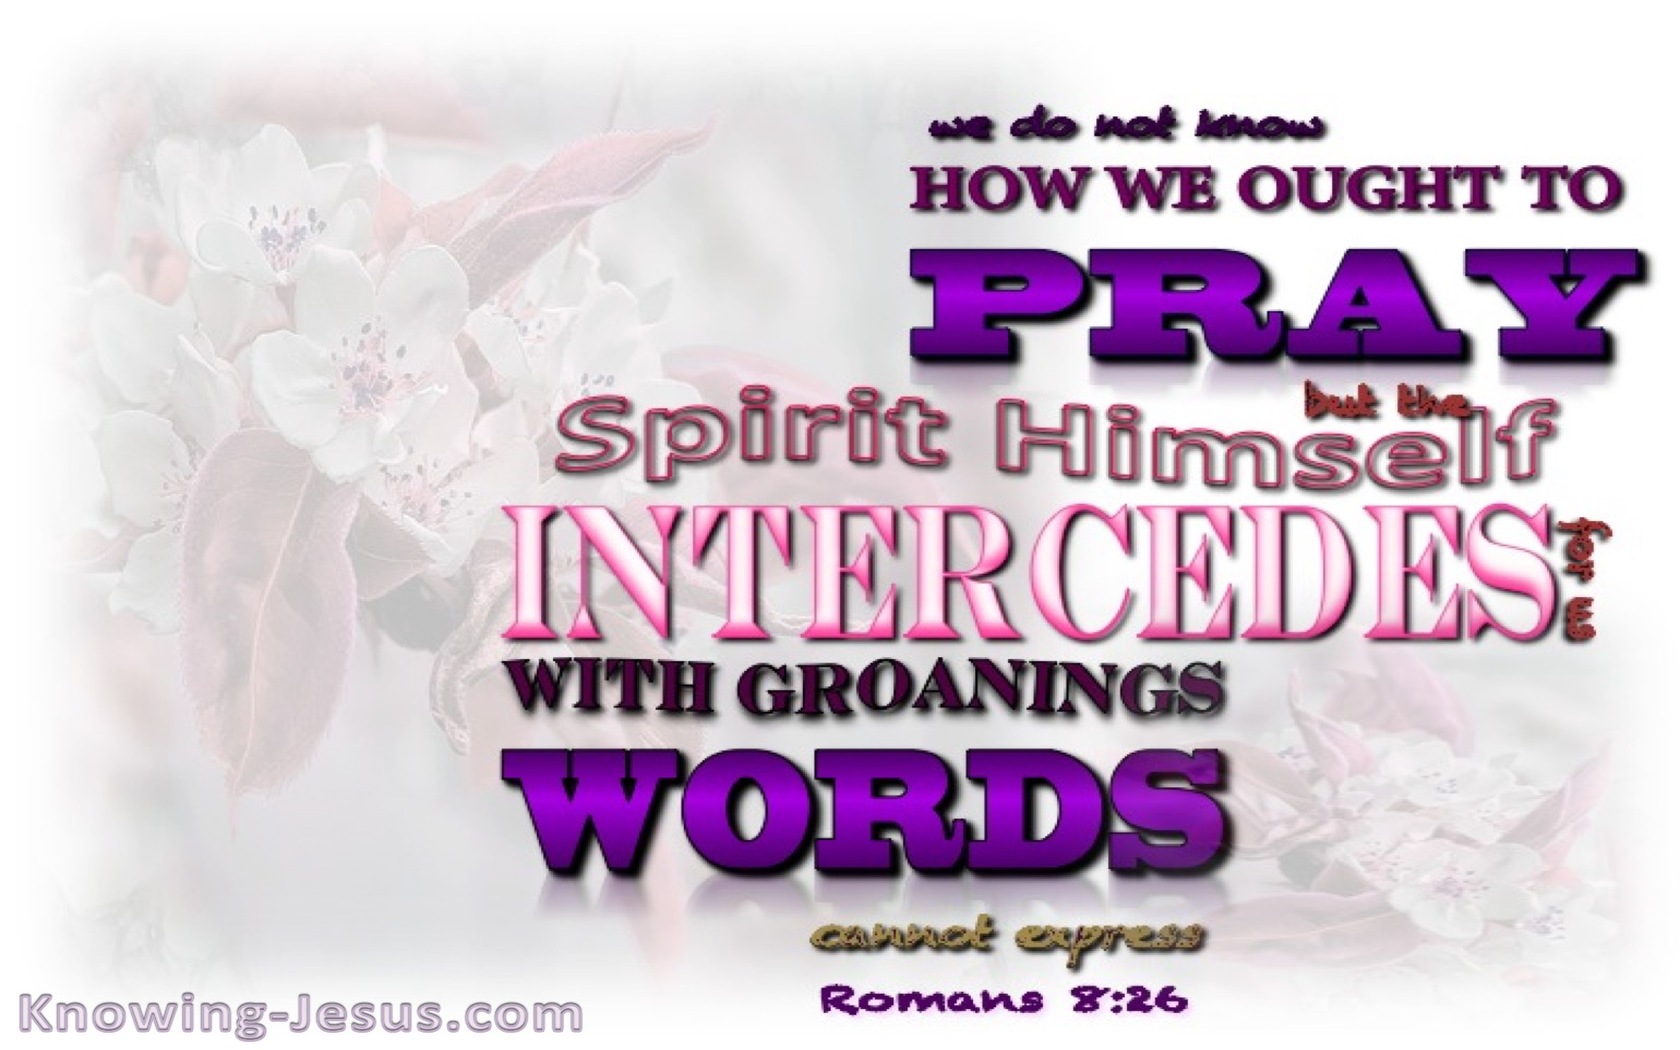 Romans 8:26 The Spirit Intercedes (purple)